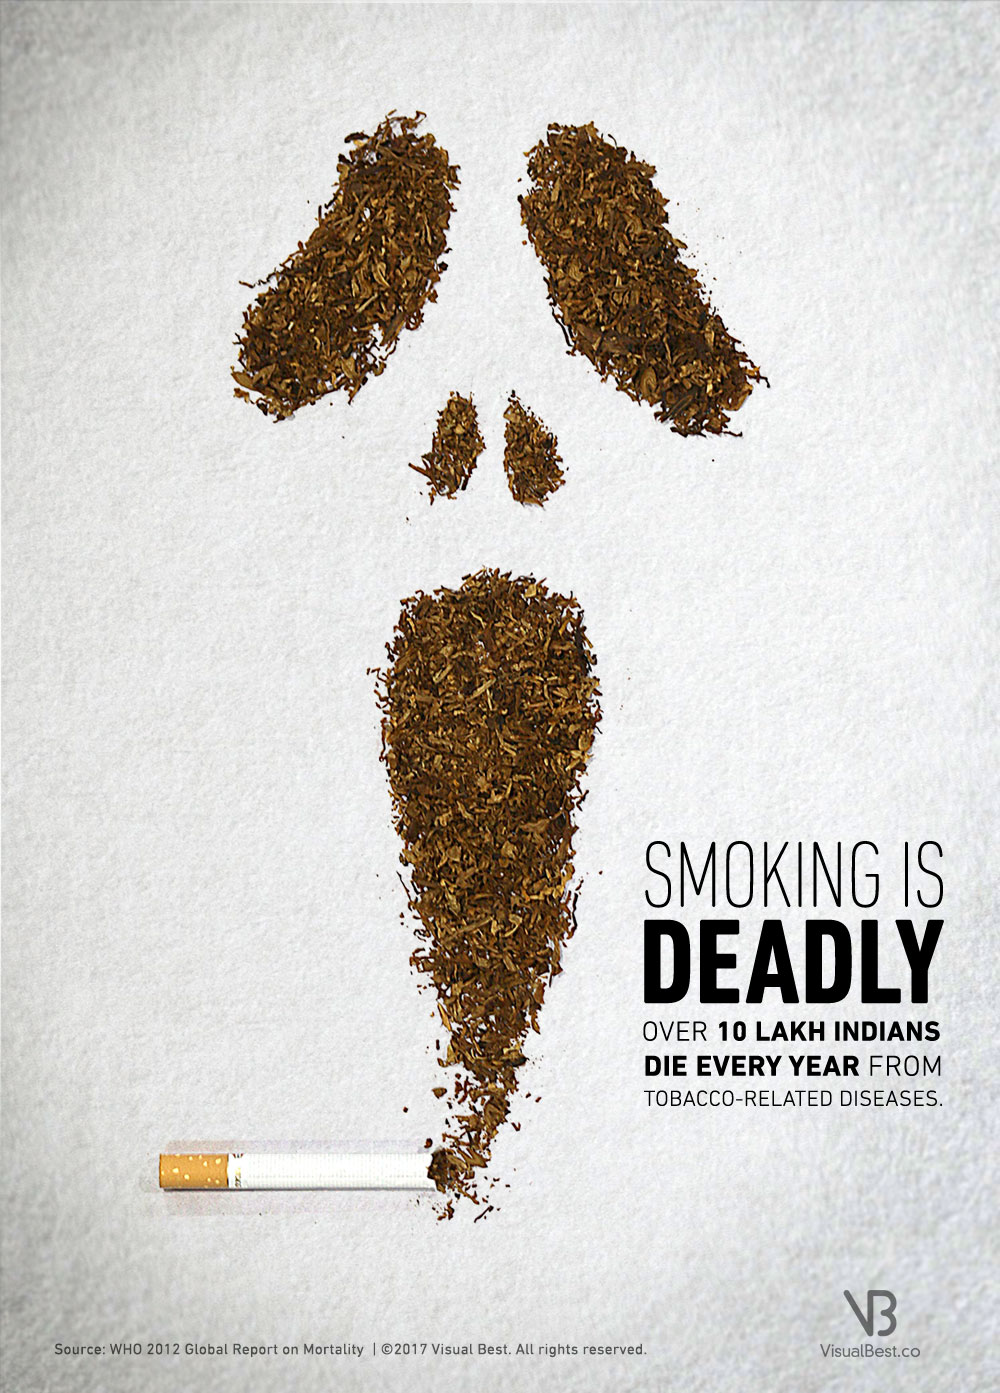 quit smoking posters